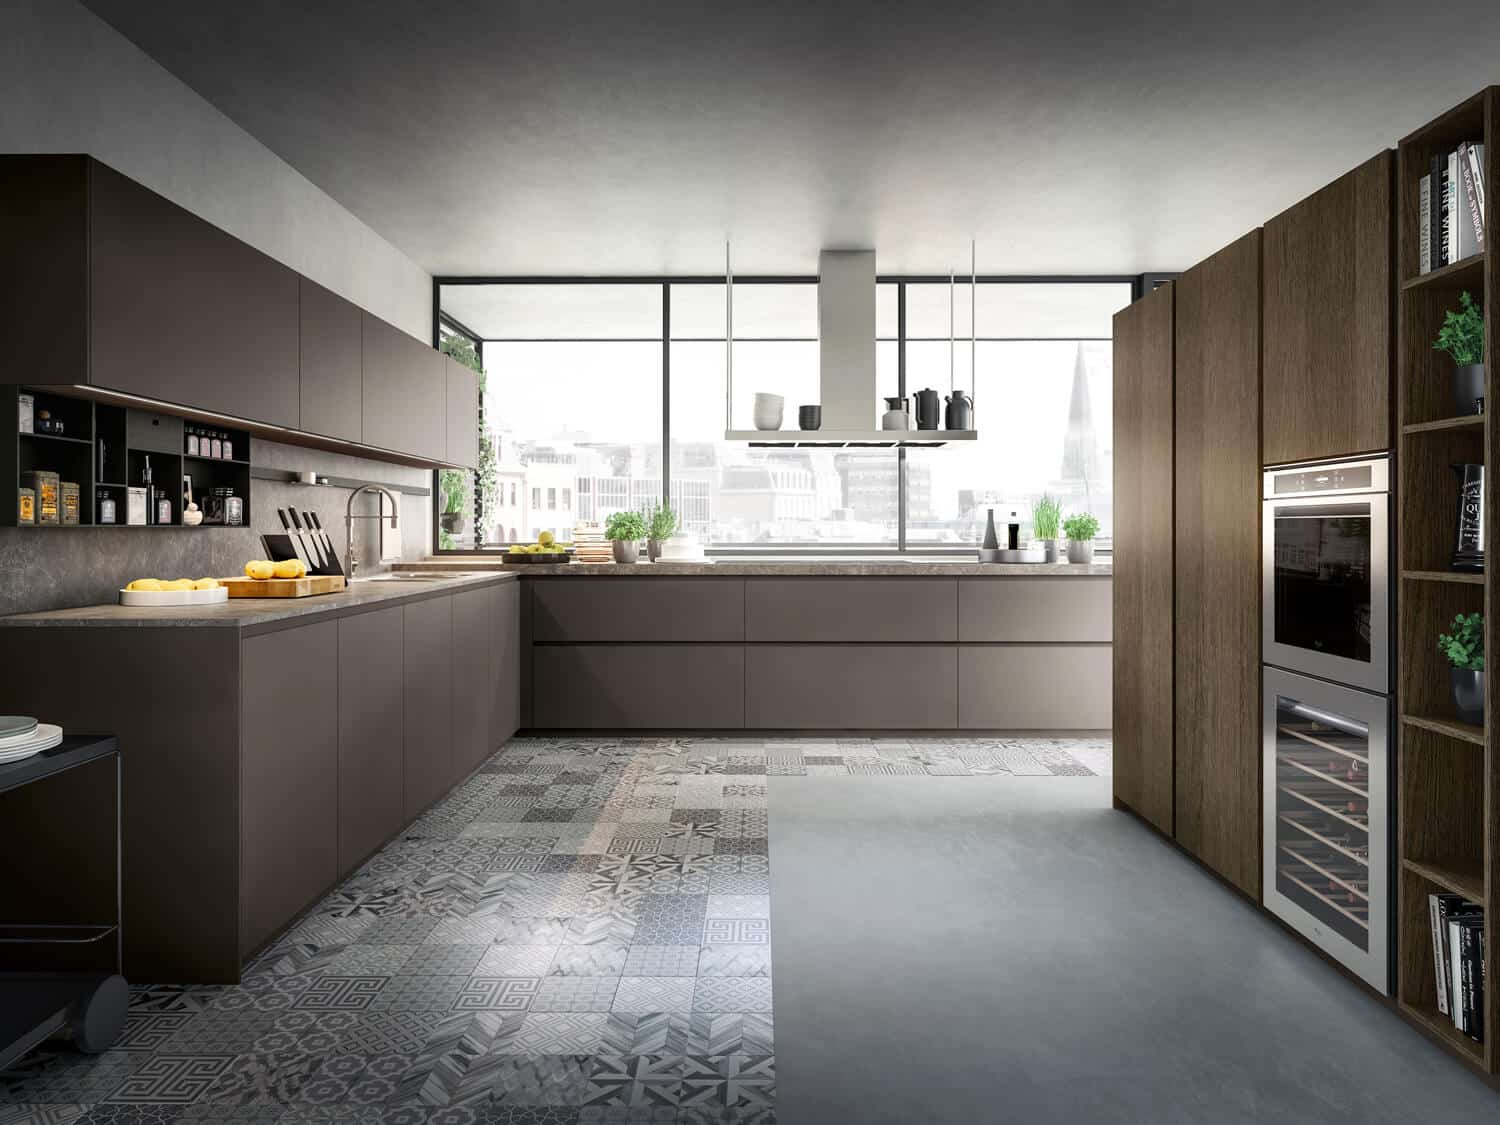 Luxury kitchen cabinets in Grigio Metro matte lacquer and dark wood veneer.